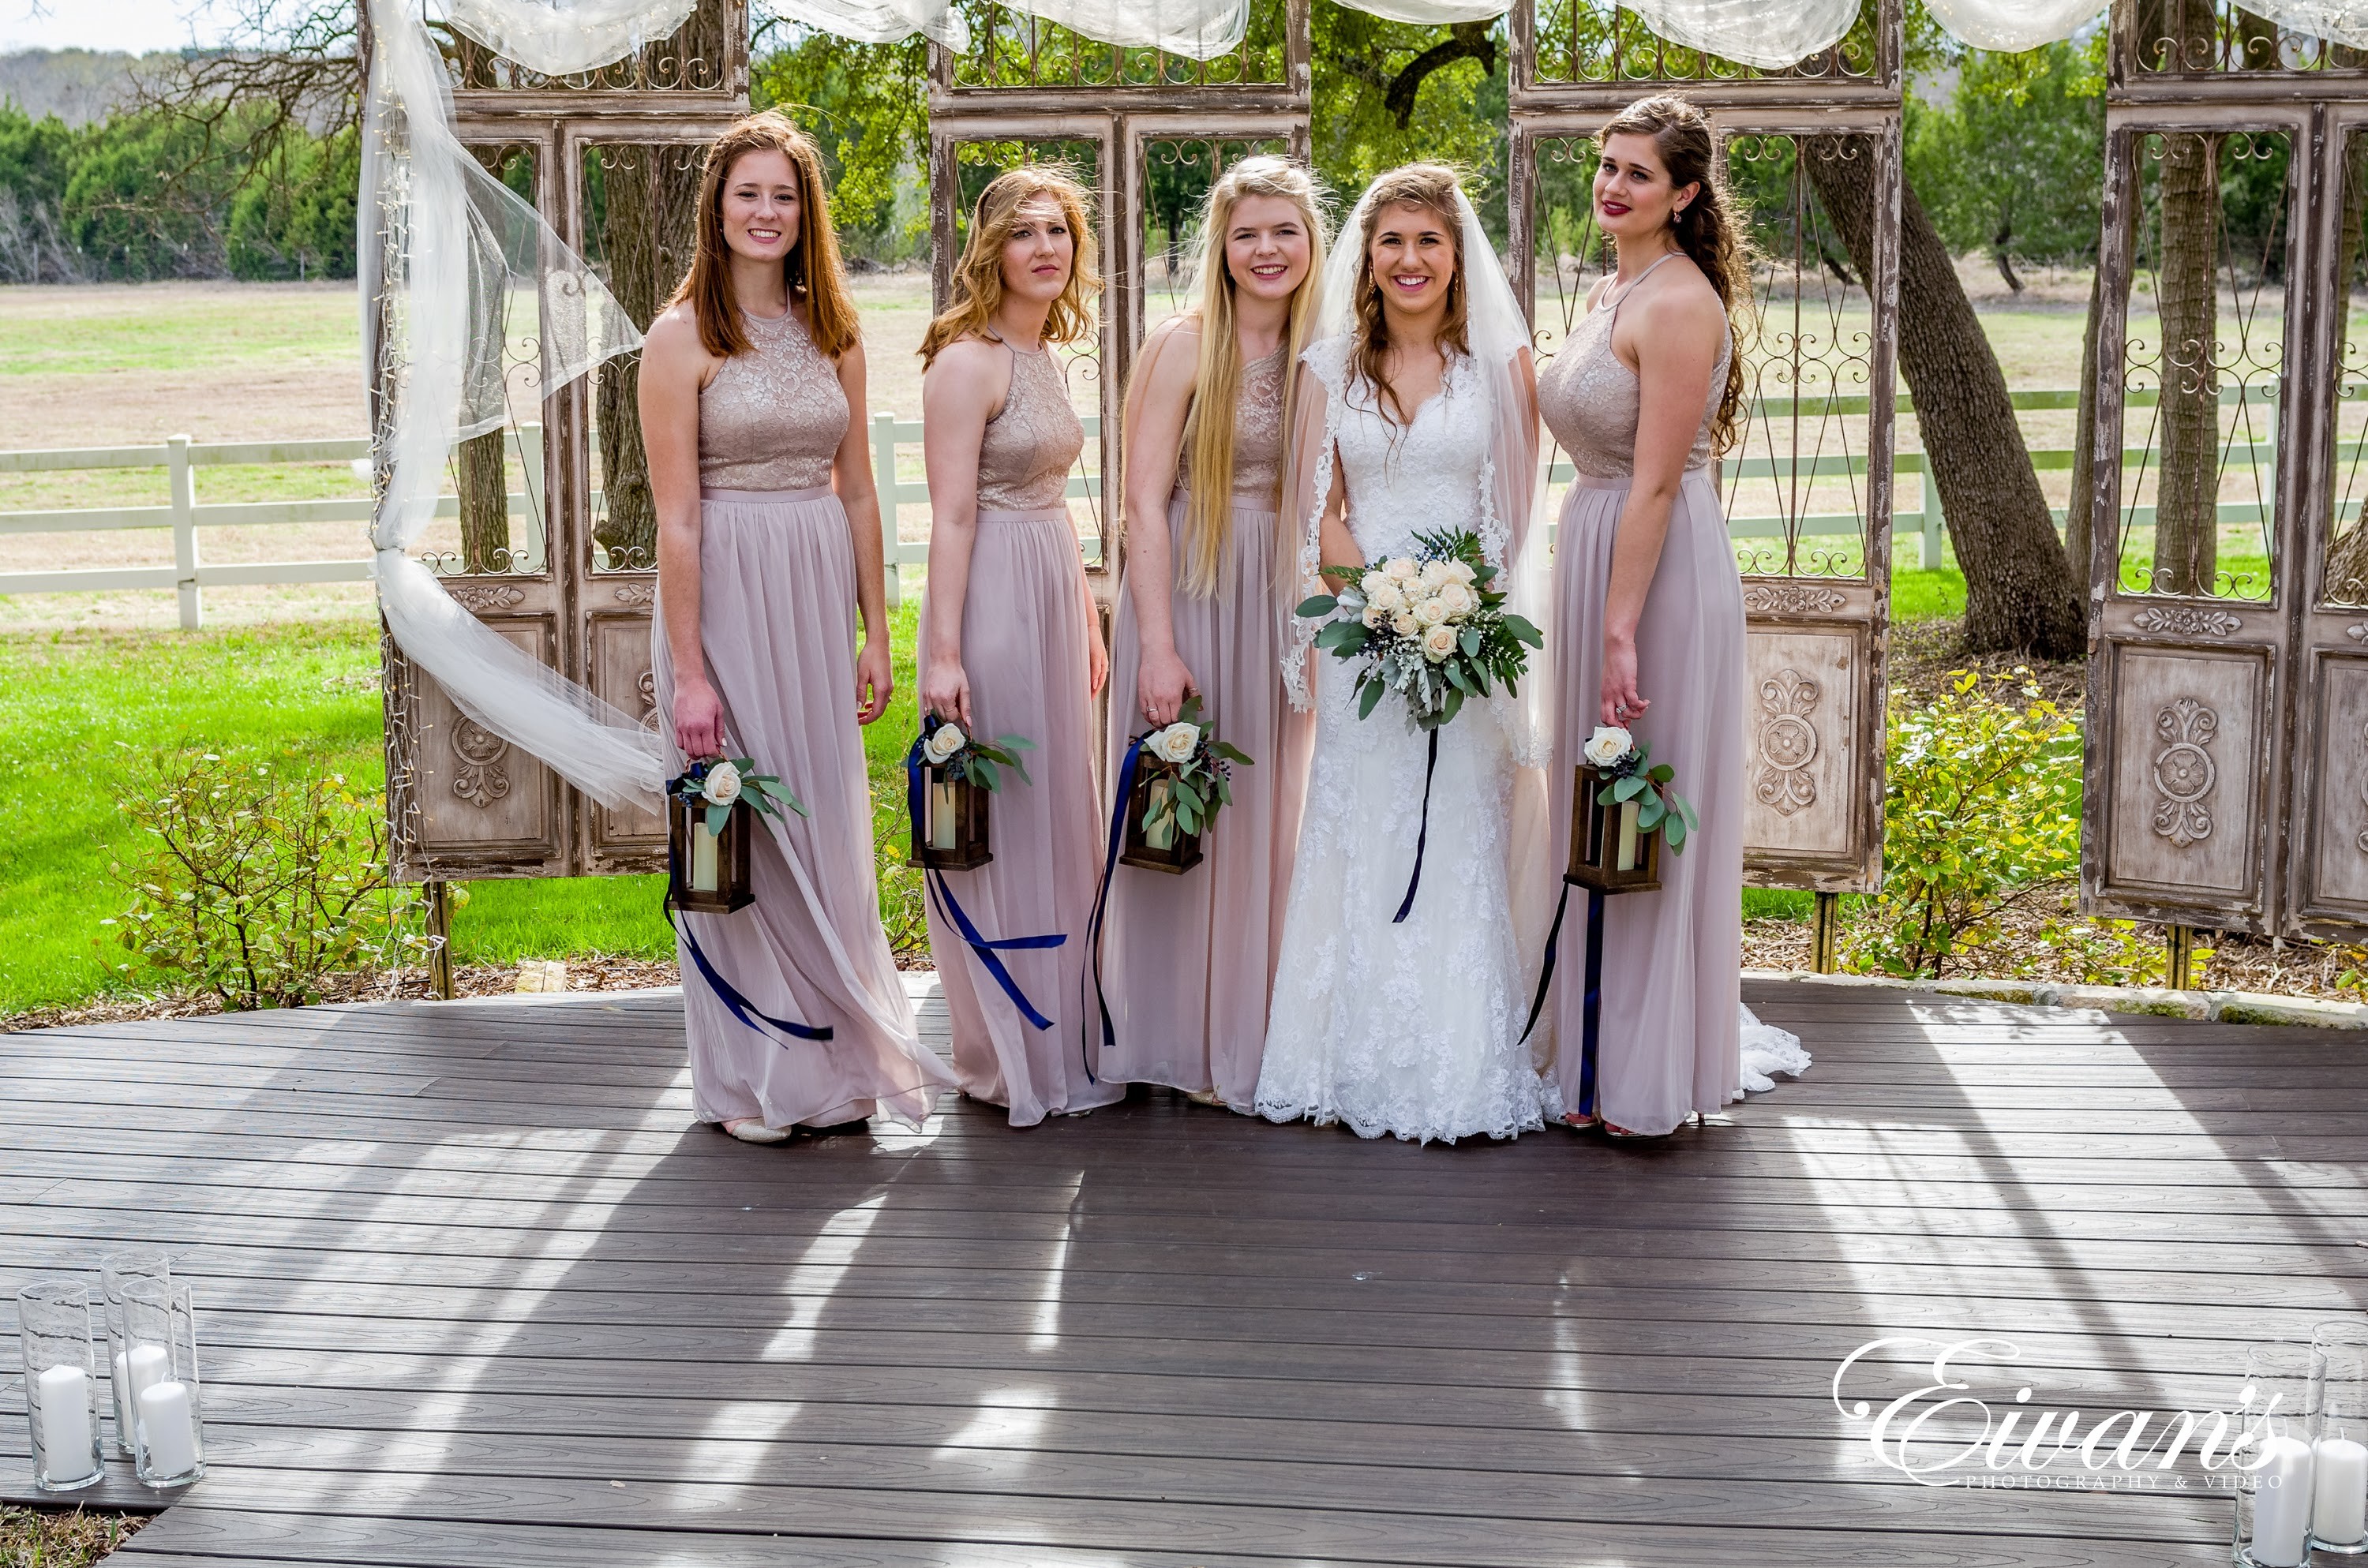 March Weddings Eivan's Photo Inc. Wedding Photography & Video